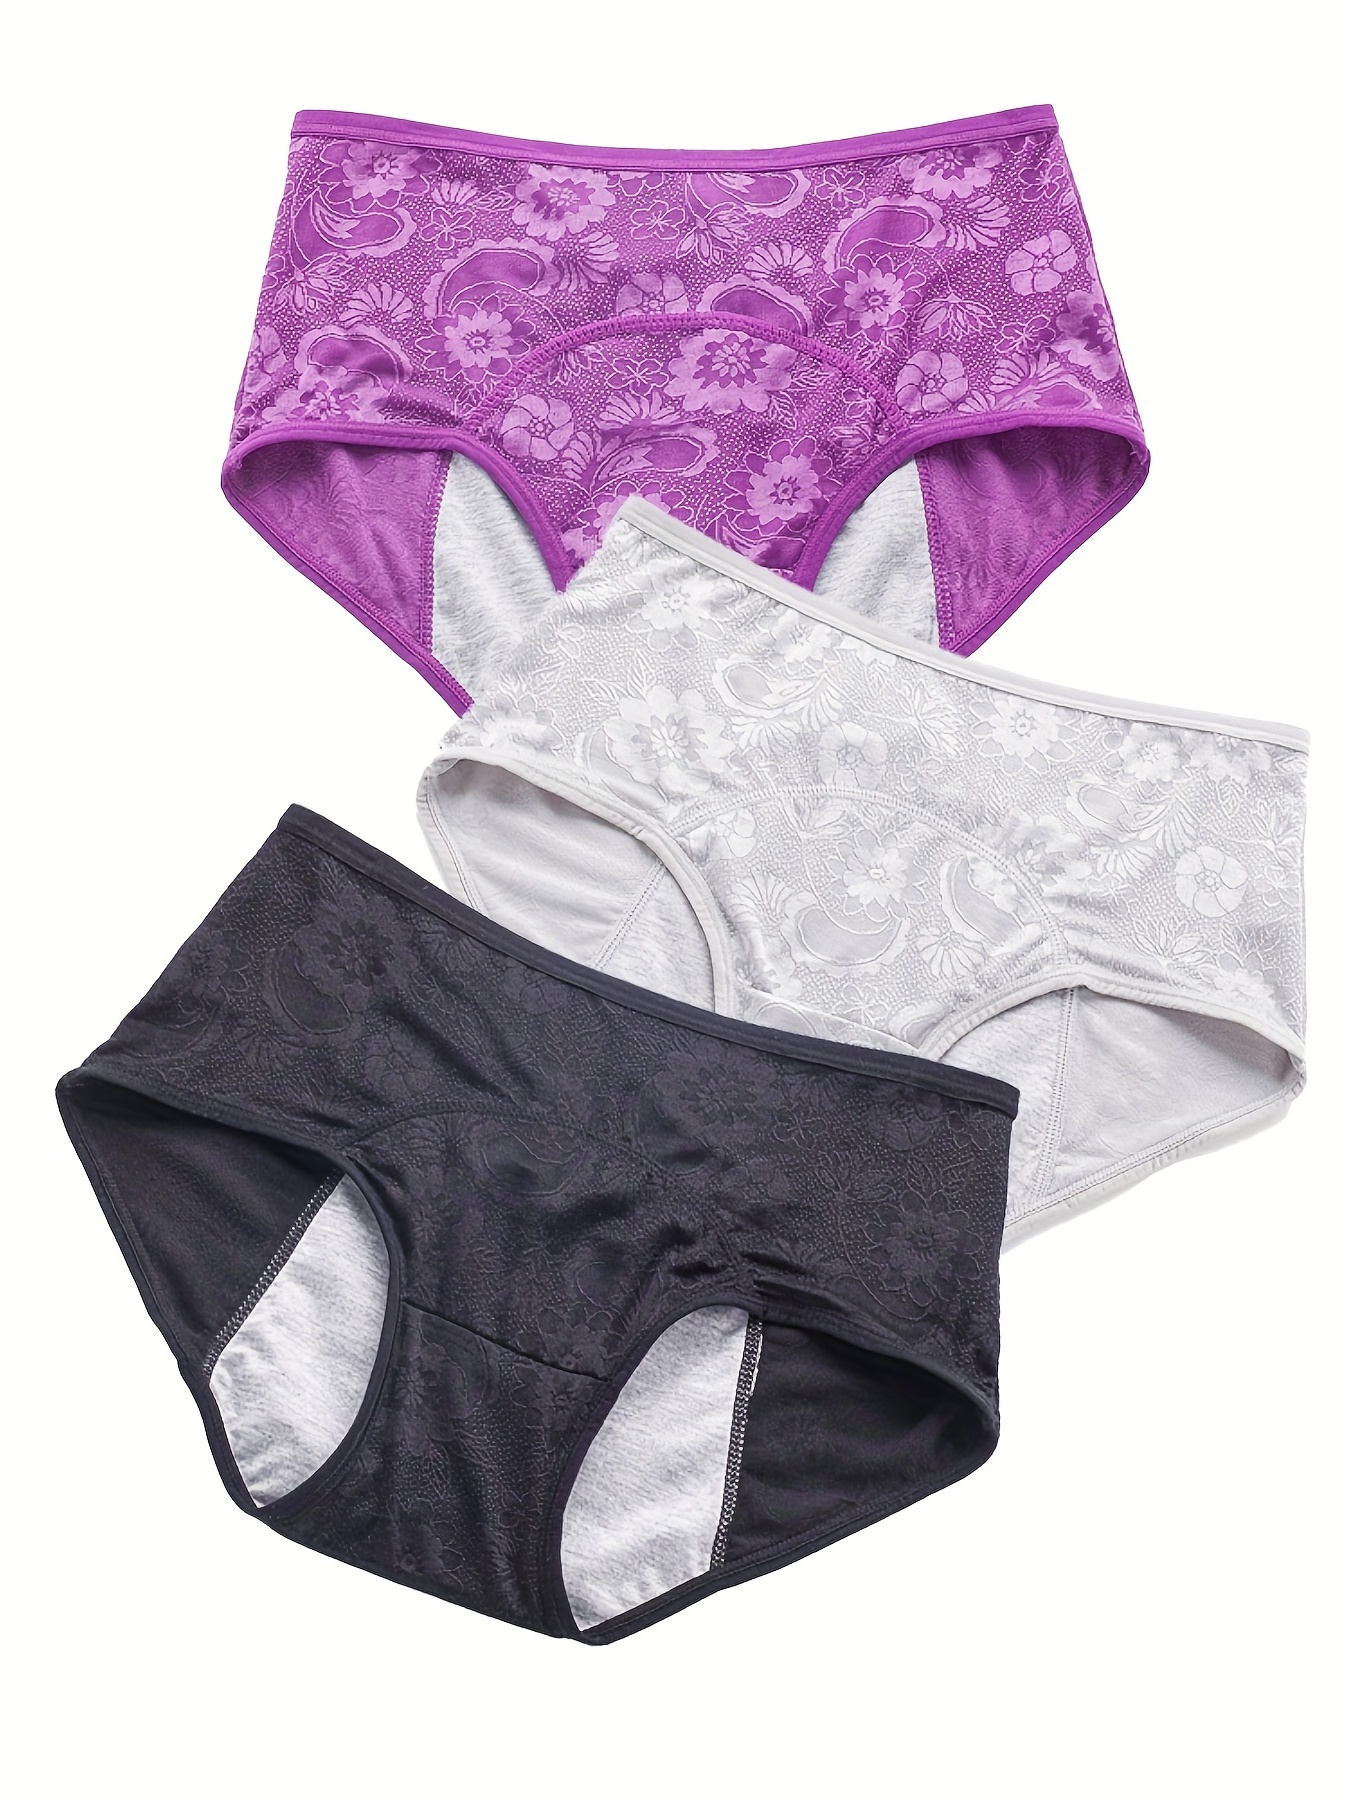 Plus Size Women Panty Briefs Menstrual Period Underwear